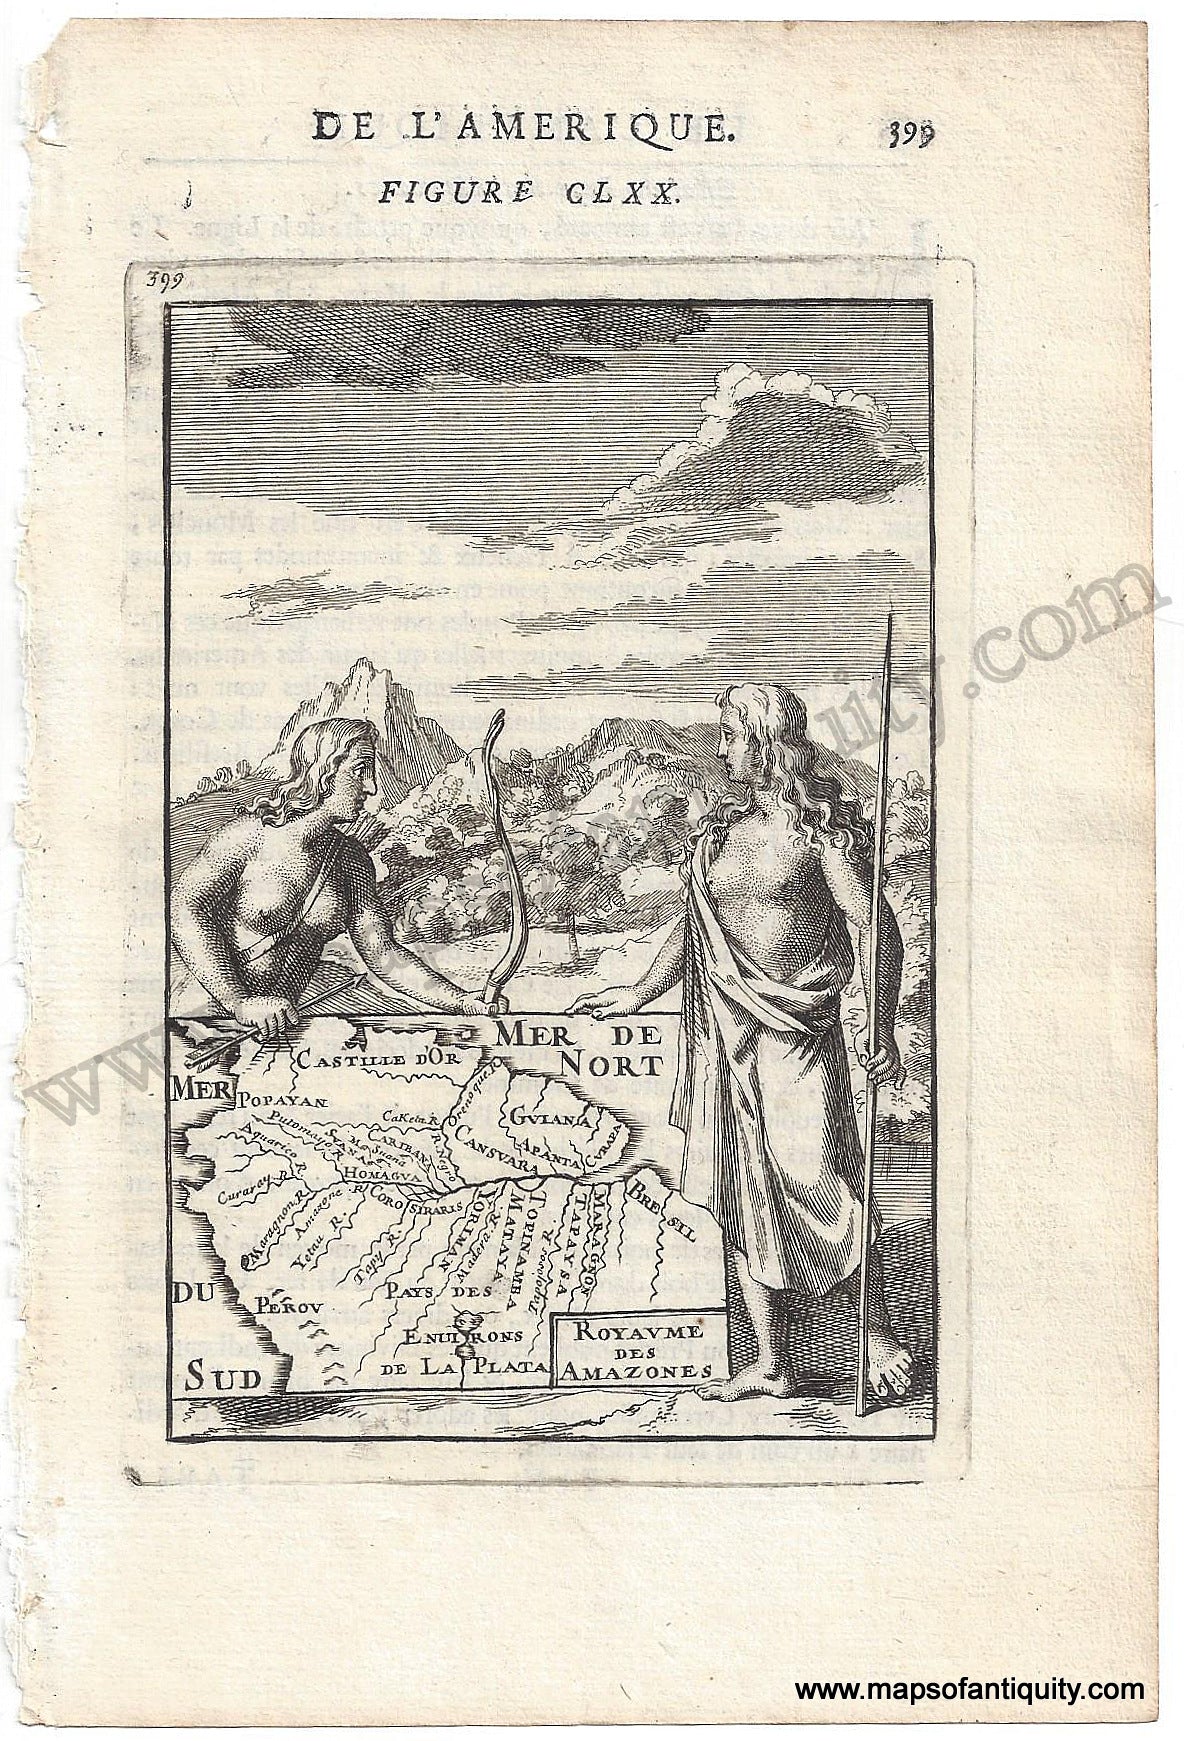 Antique-Uncolored-Print-Royaume-des-Amazones-1683-Mallet-1600s-17th-century-Maps-of-Antiquity